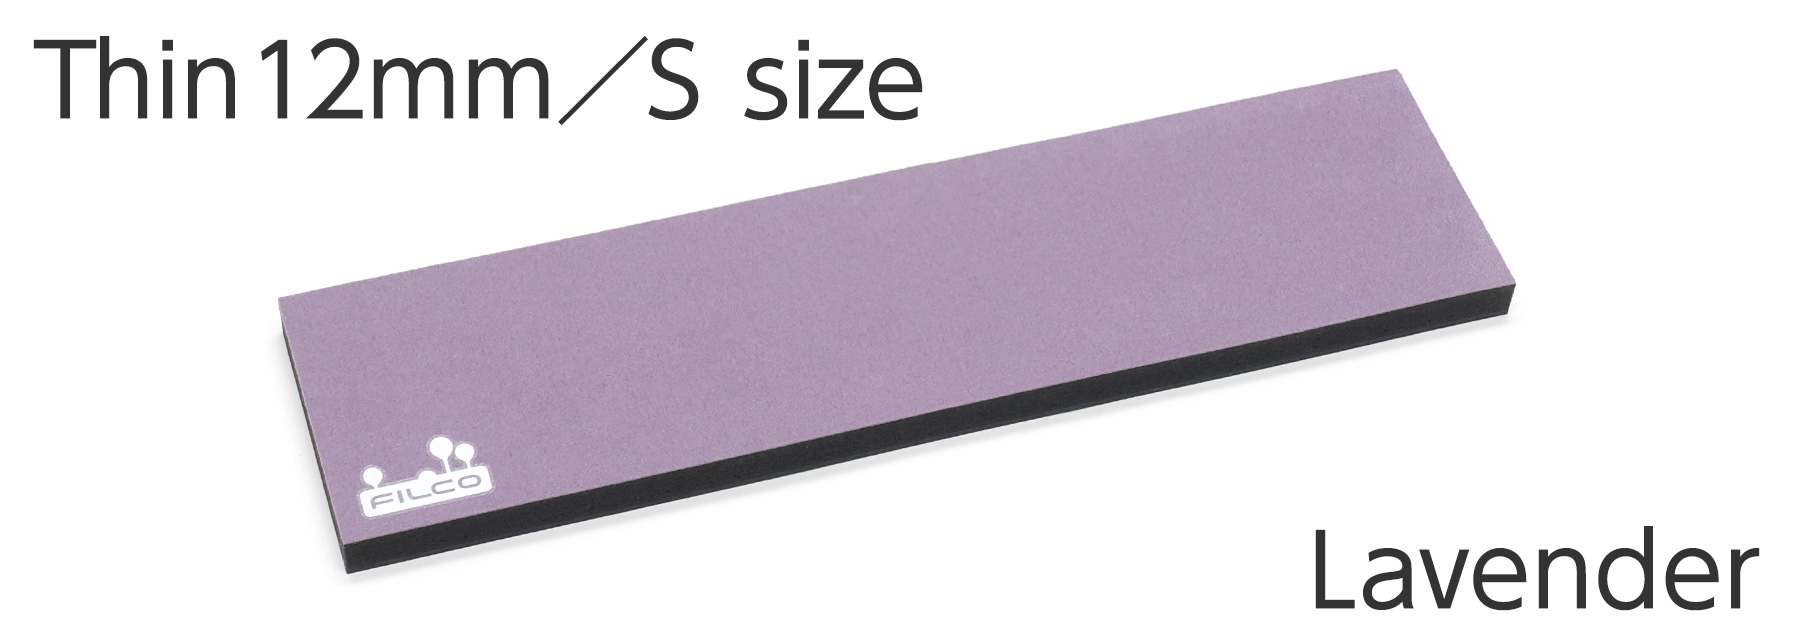 FILCO Majestouch Wrist Rest "Macaron" Thin 12mm / S size / Lavender